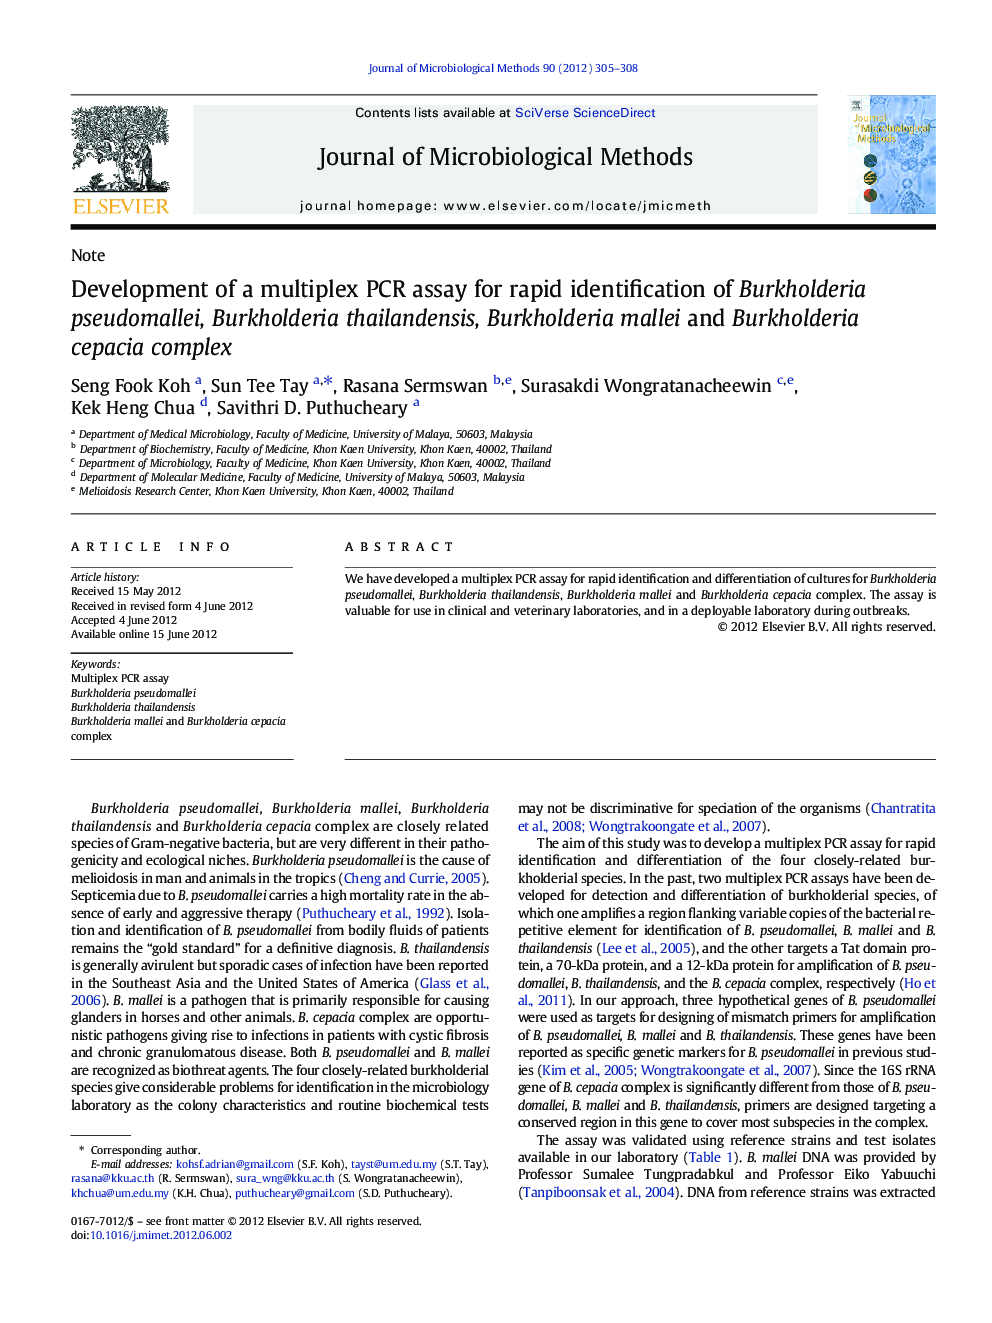 Development of a multiplex PCR assay for rapid identification of Burkholderia pseudomallei, Burkholderia thailandensis, Burkholderia mallei and Burkholderia cepacia complex